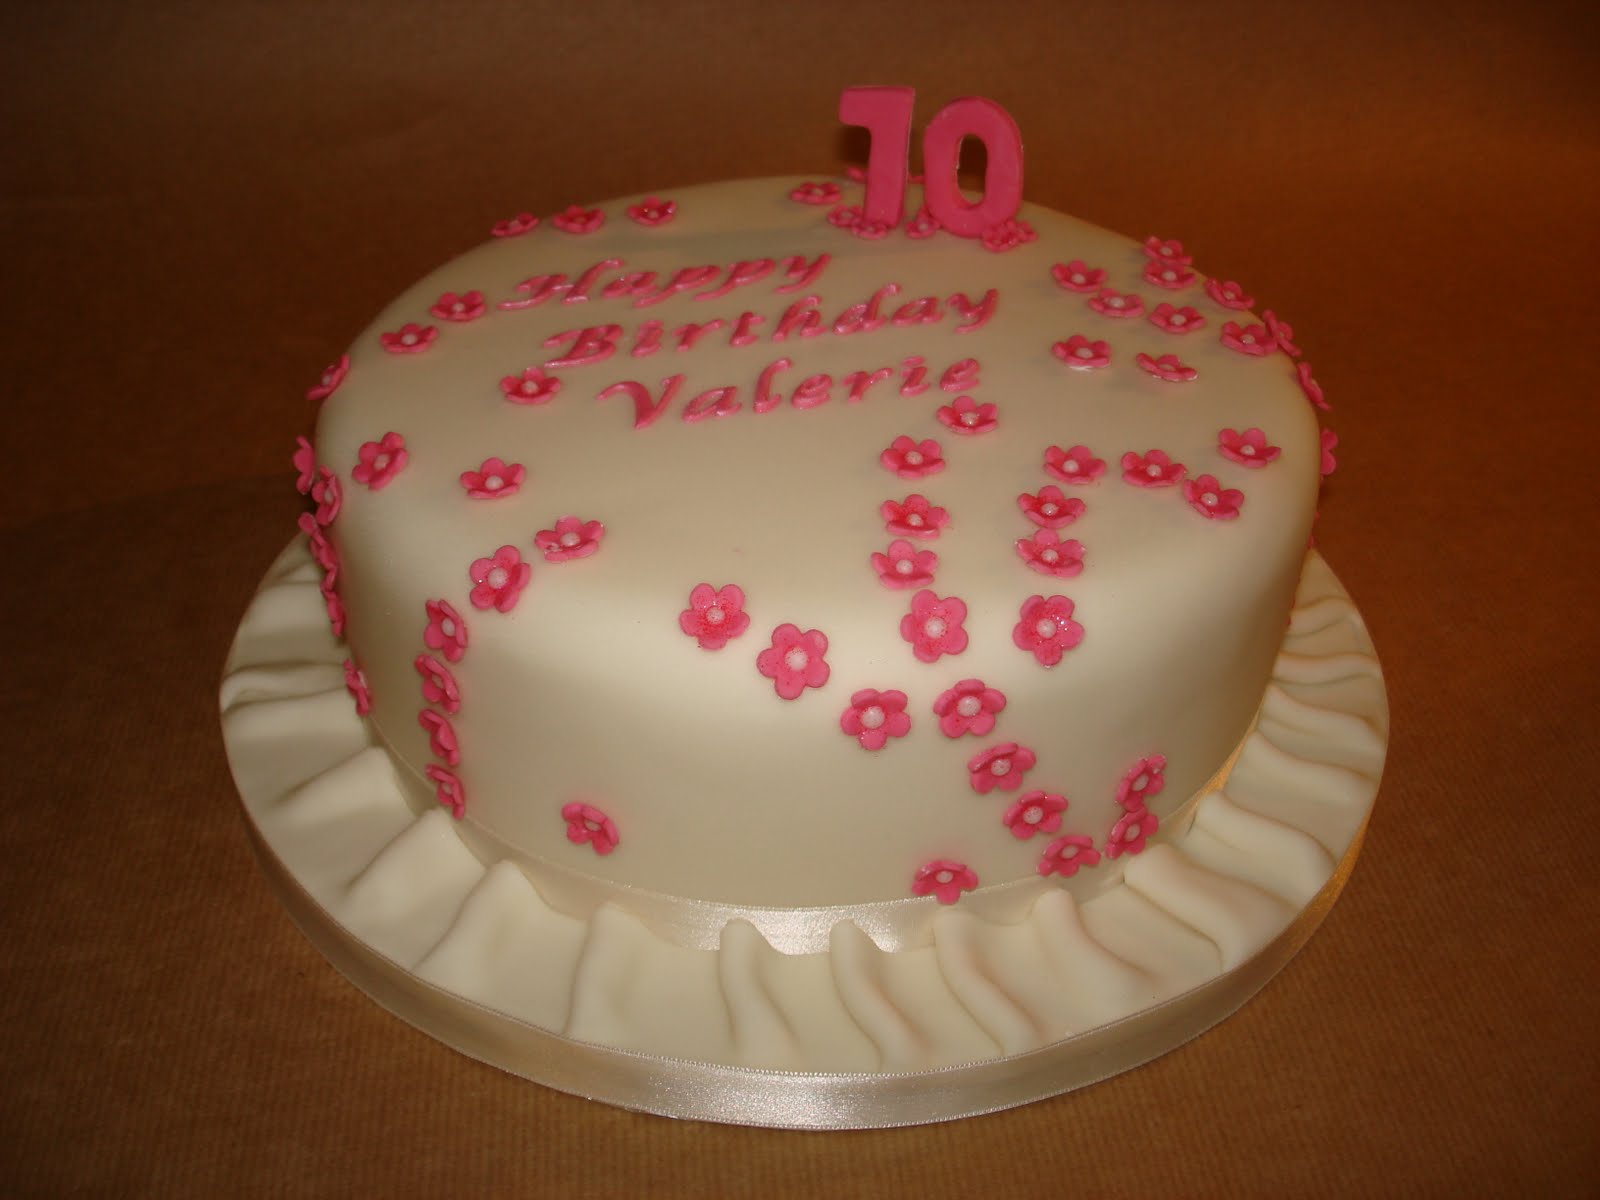 Happy Birthday Valerie Cake.